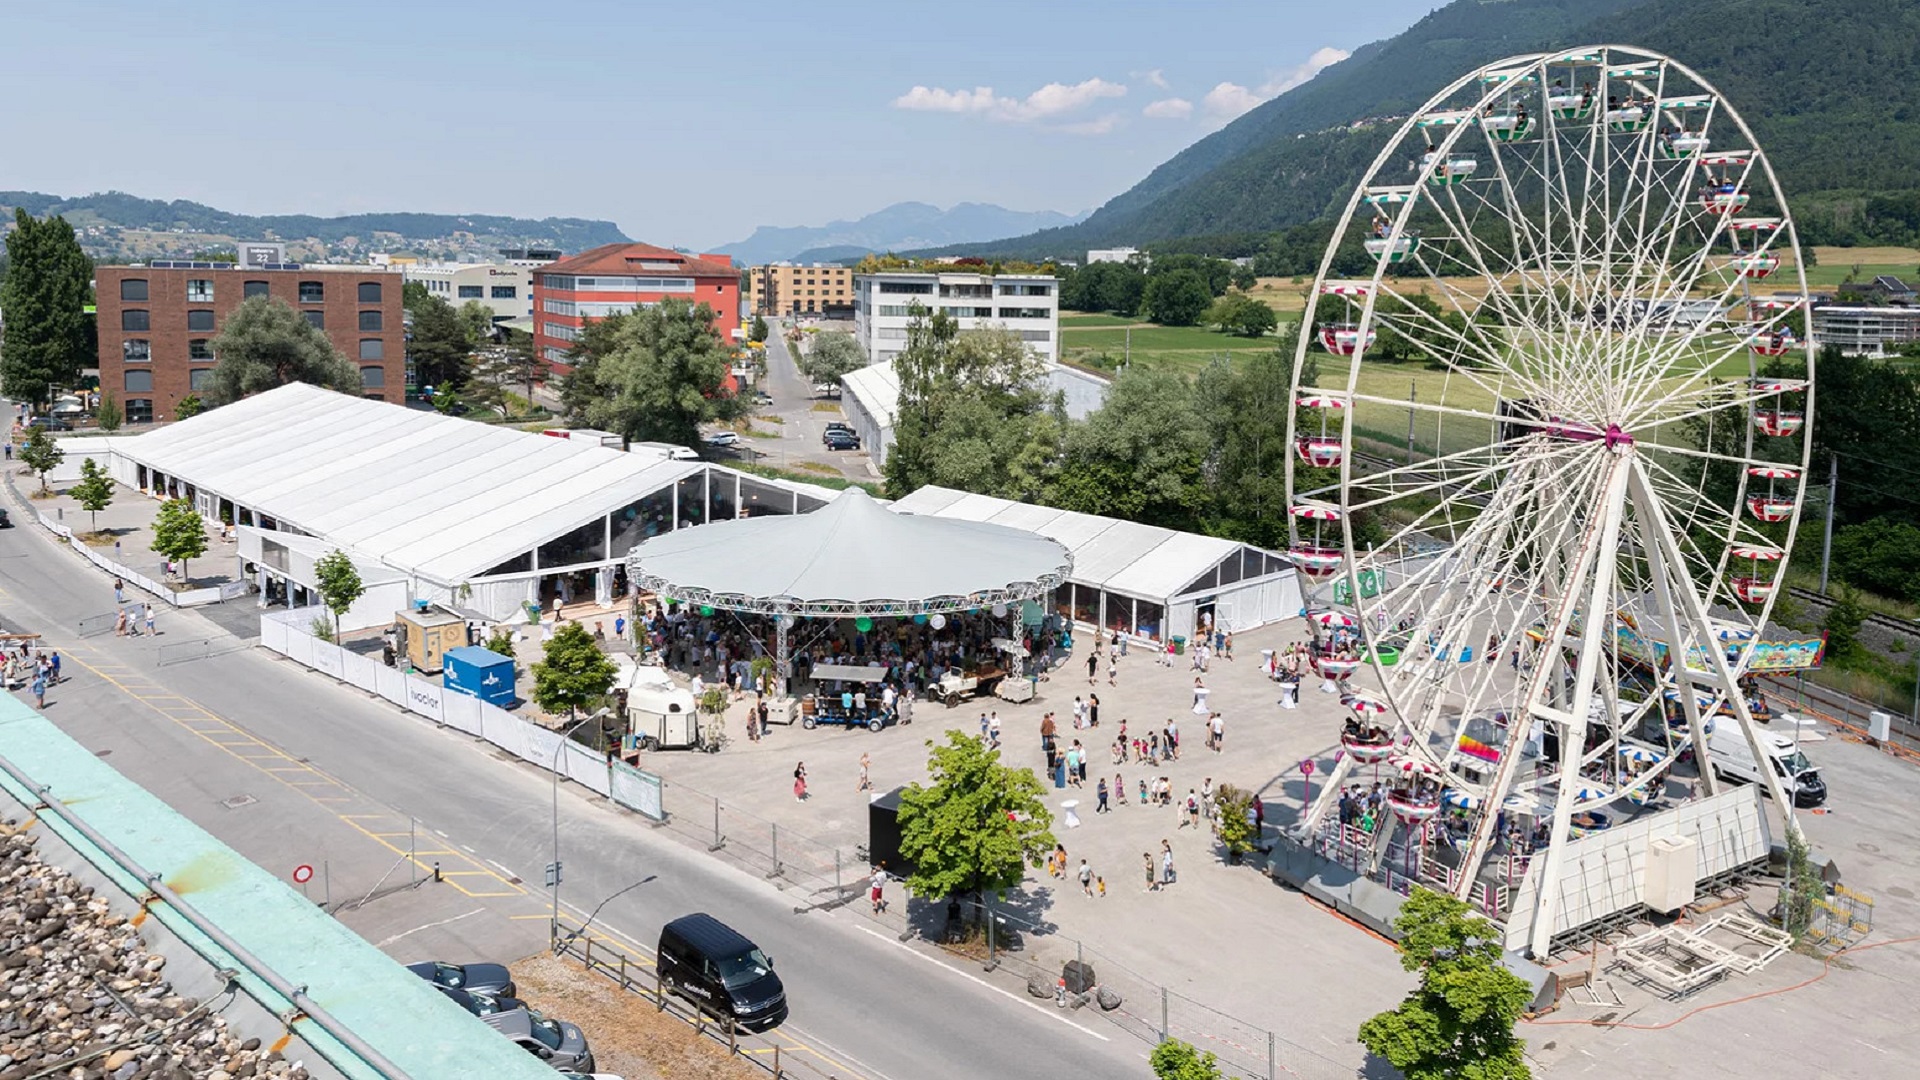 Over 3,000 visitors attended Ivoclar’s anniversary celebrations in June in Liechtenstein. (Image: Ivoclar)